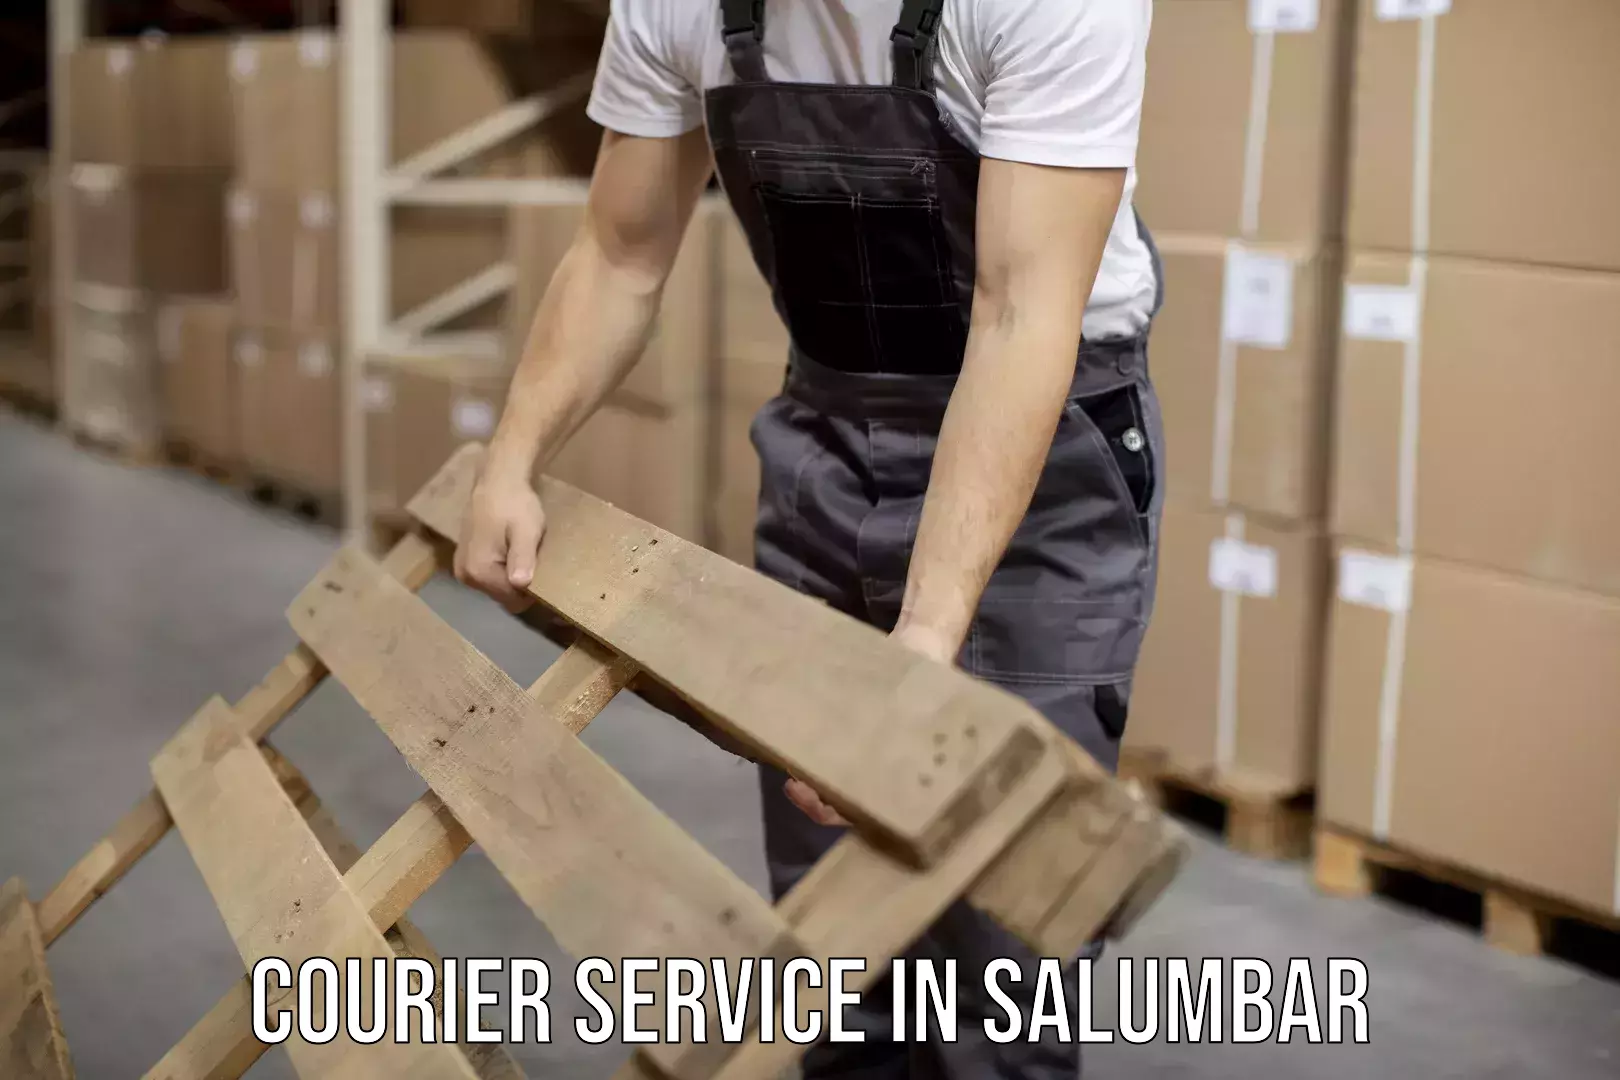 Seamless shipping service in Salumbar